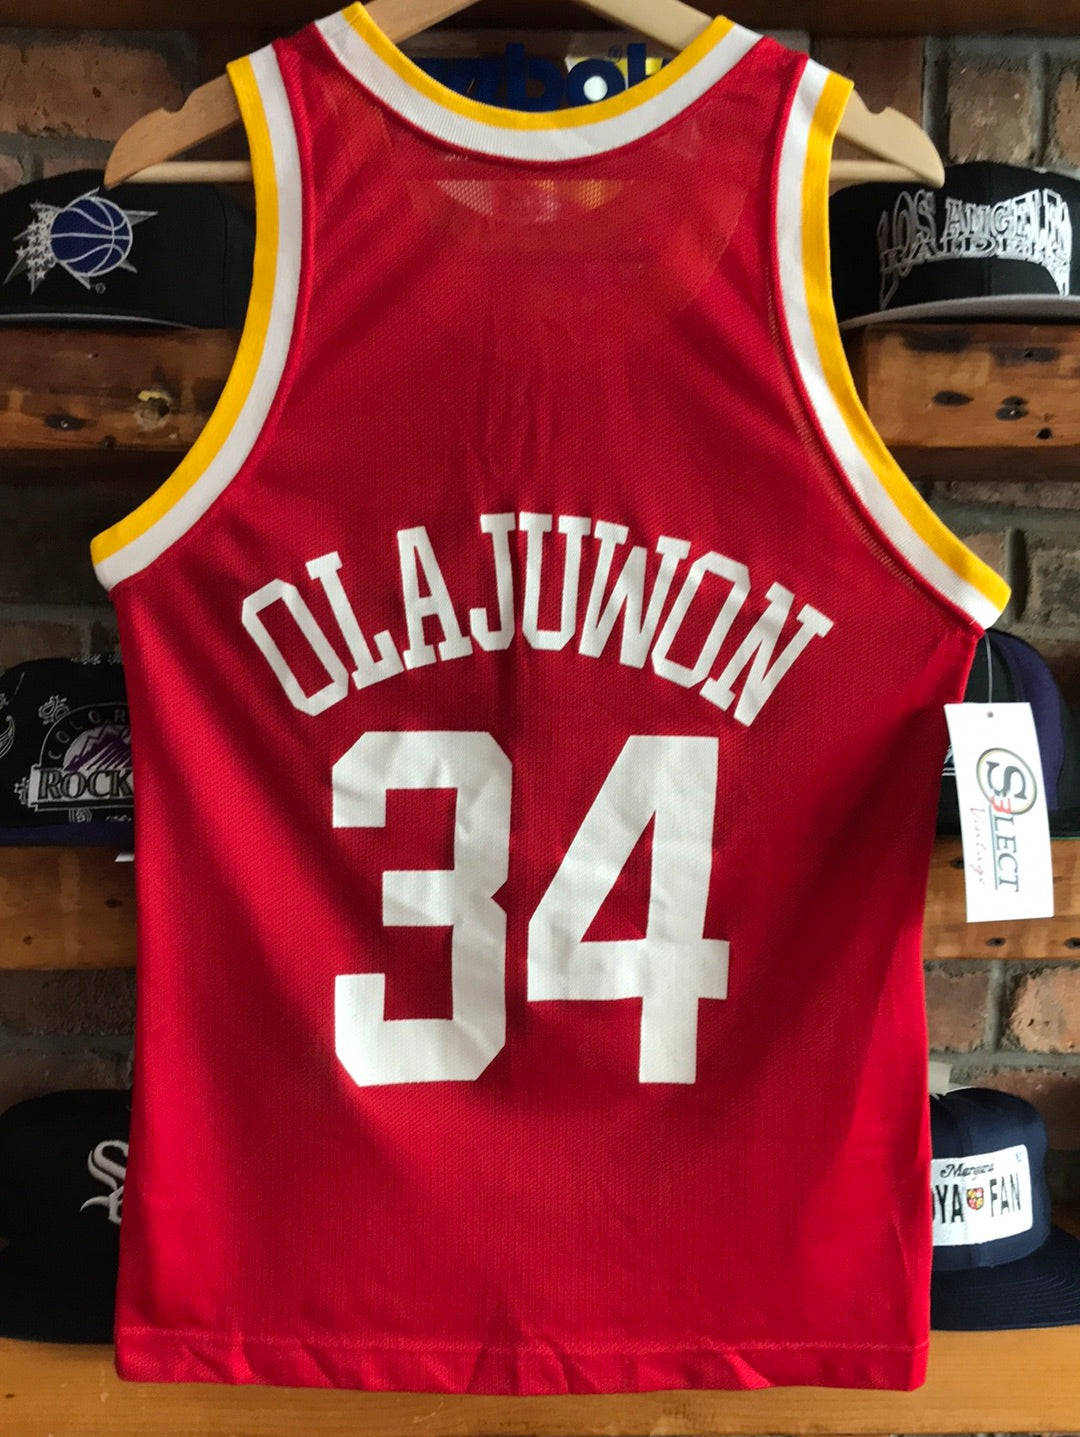 Vintage Champion Houston Rockets Hakeem Olajuwon Jersey Size 36 Small